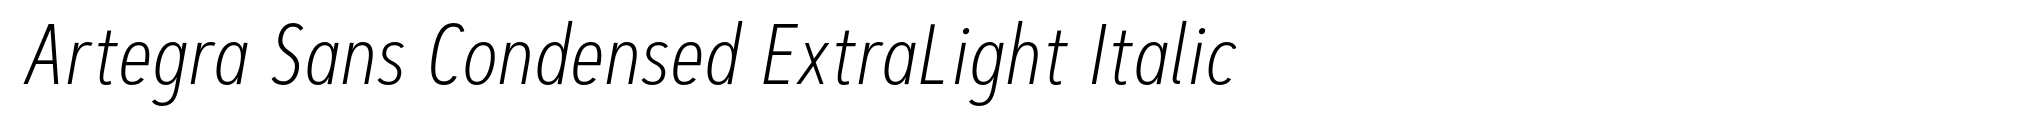 Artegra Sans Condensed ExtraLight Italic image